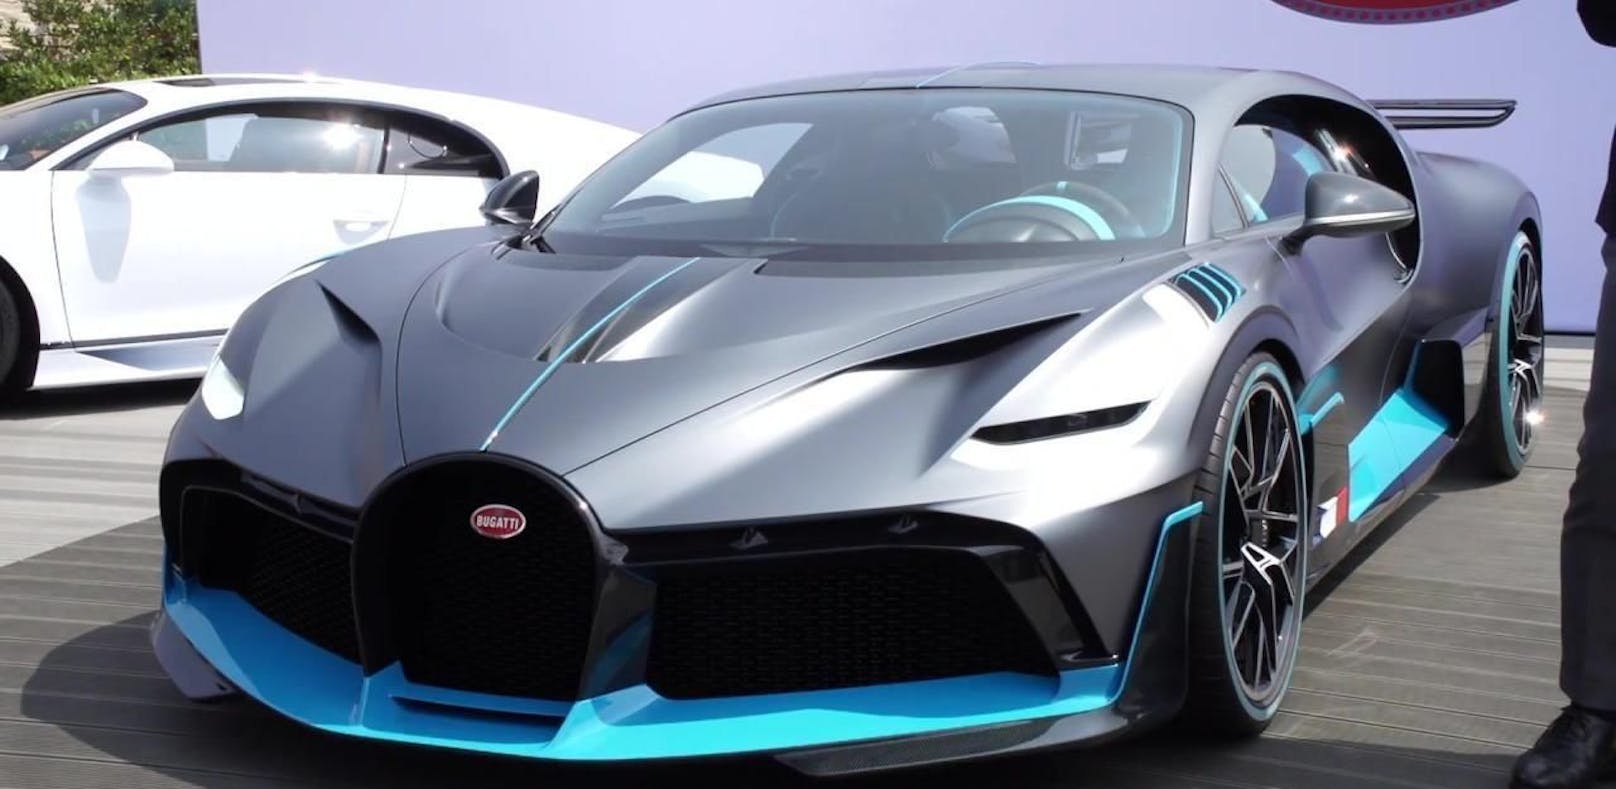 "Divo": Bugatti enthullt sein neuestes Modell